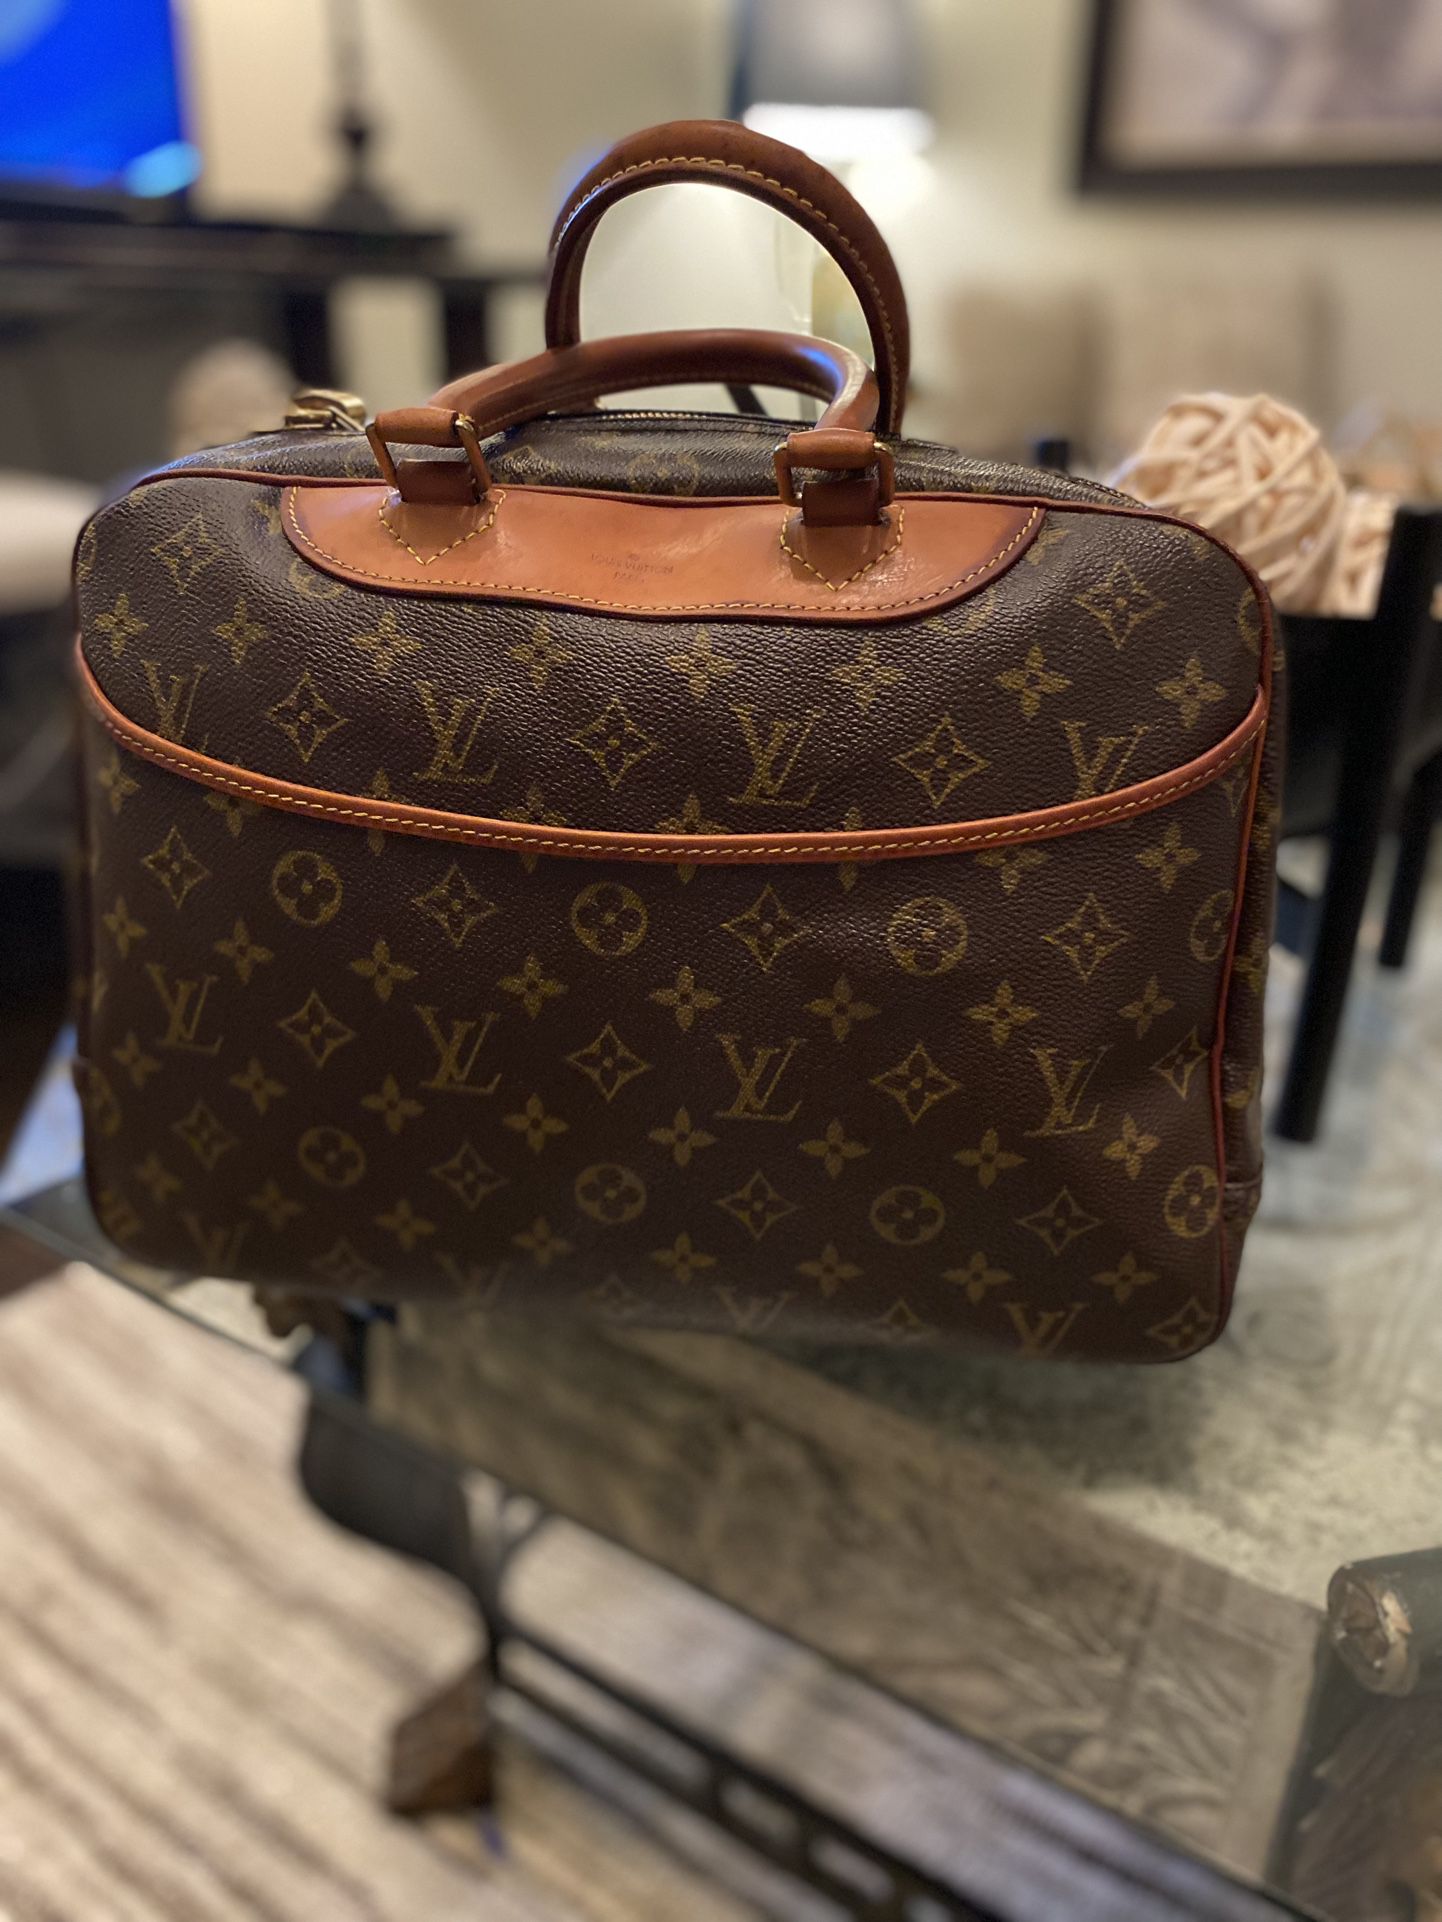 Authentic Louis Vuitton Monogram Bag 